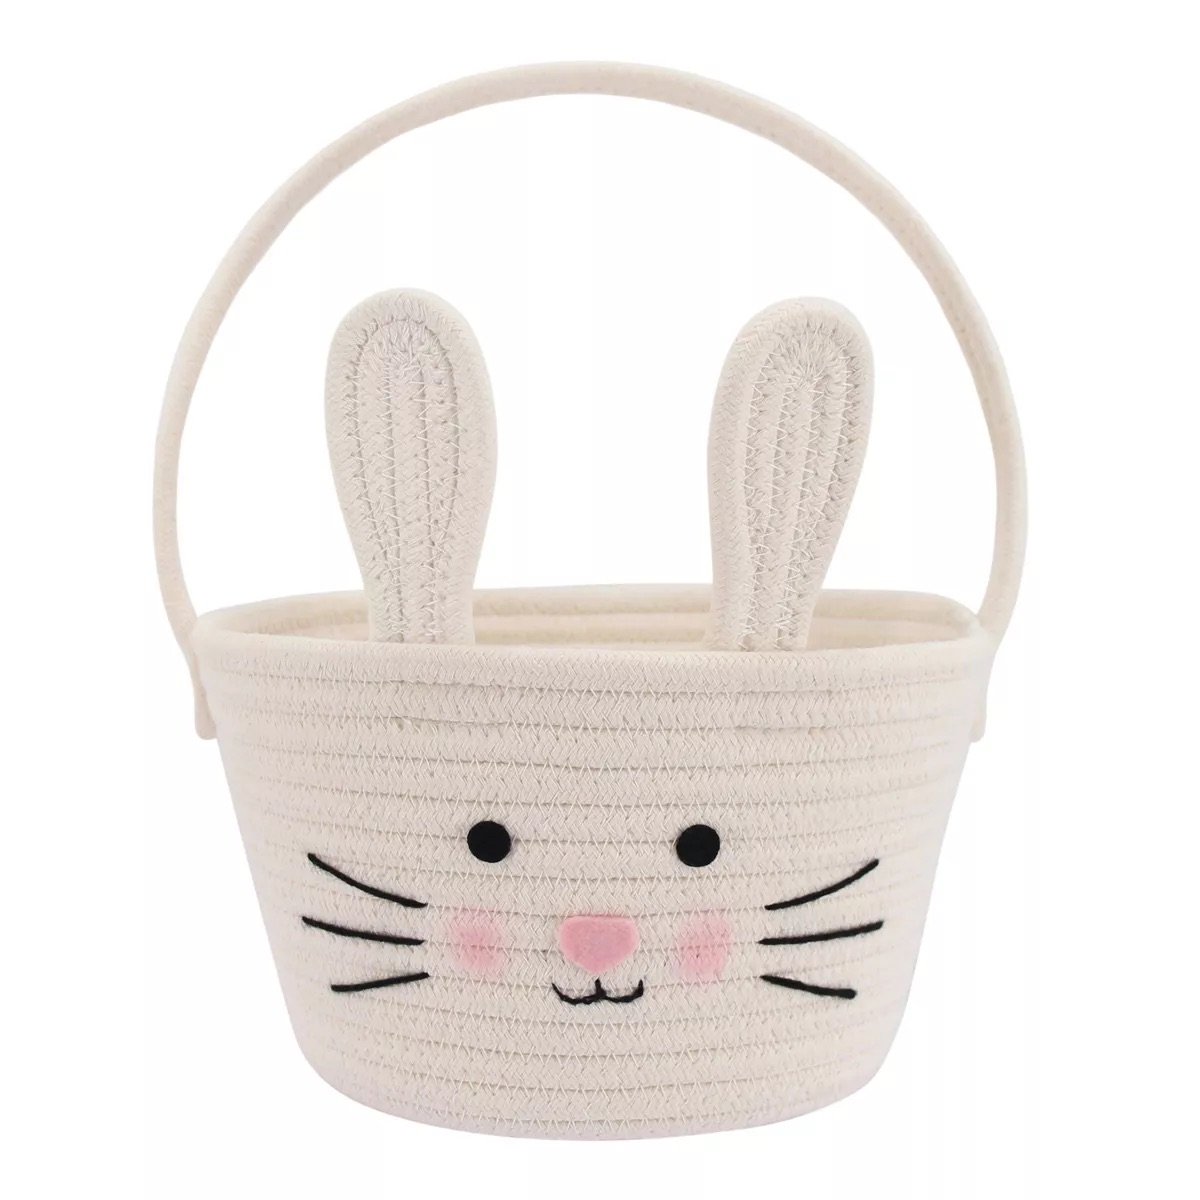 Circular Rope Decorative Easter Basket Bunny White.jpeg